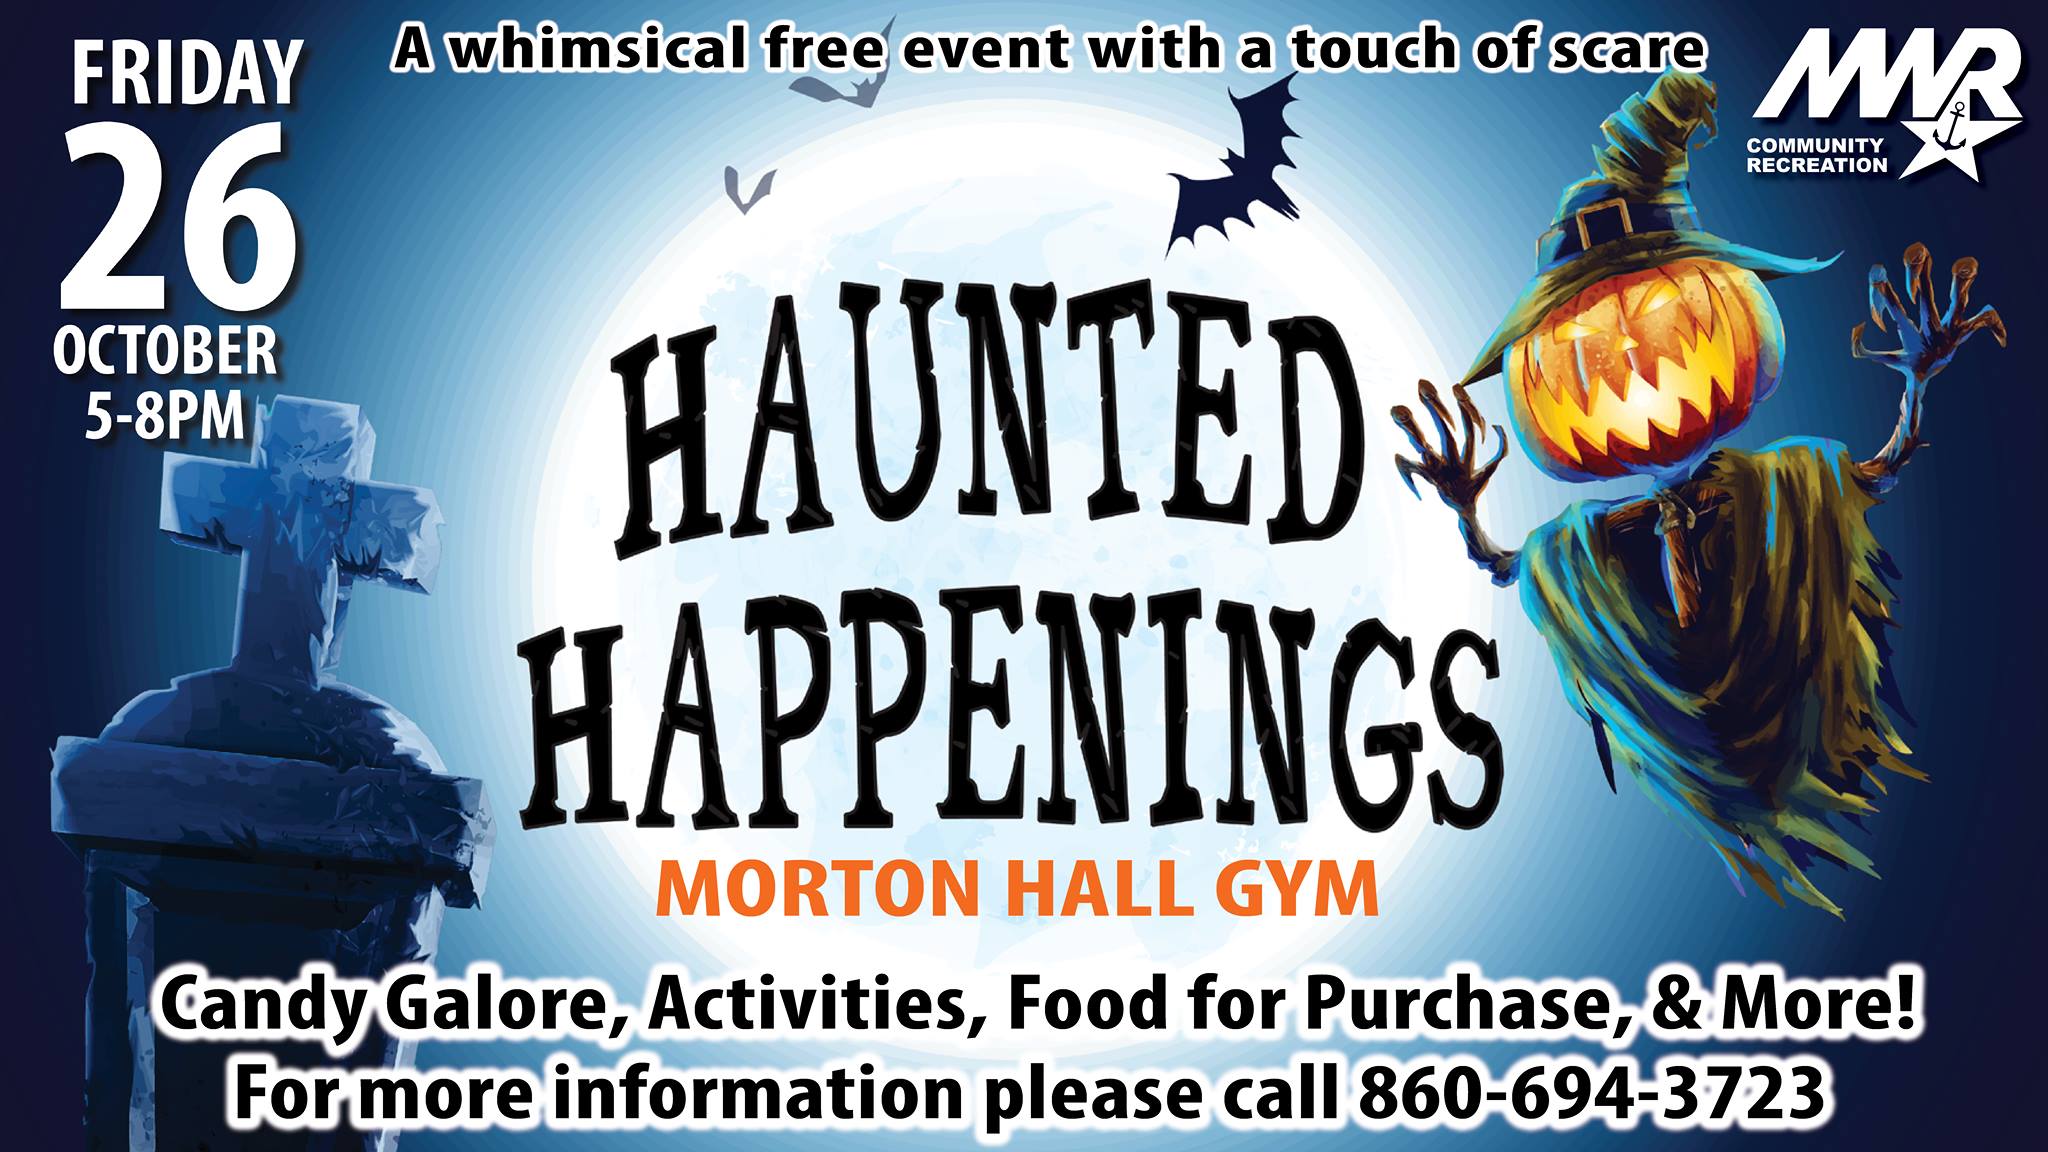 Haunted Happenings at Morton Hall Gym Groton